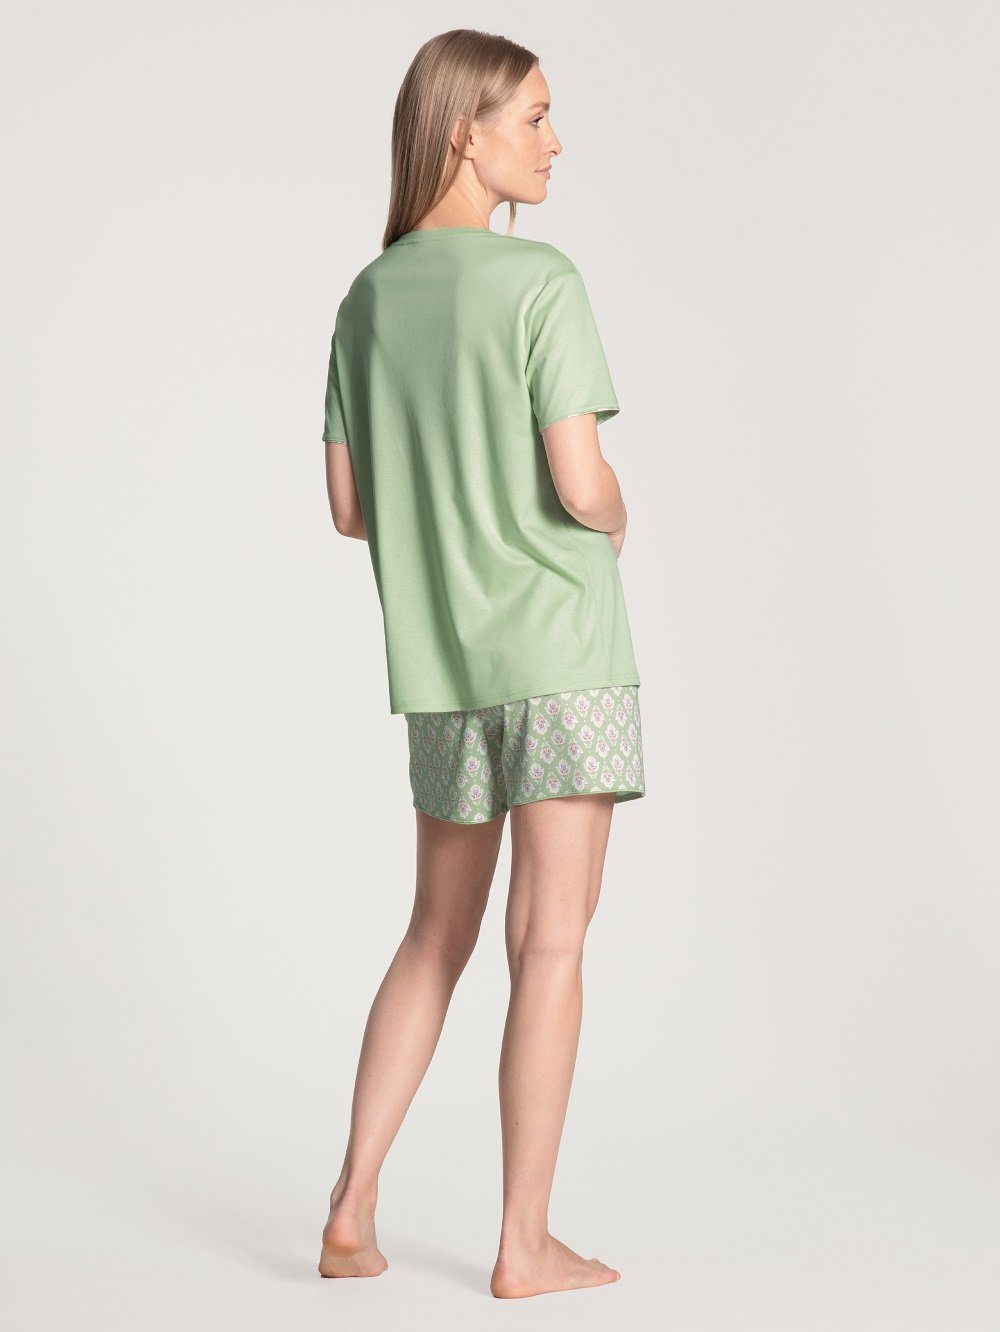 Kurzpyjama Hose tlg., CALIDA 1 Stück, (1 1 41293 Stück) gemusterte Pyjama Calida grün